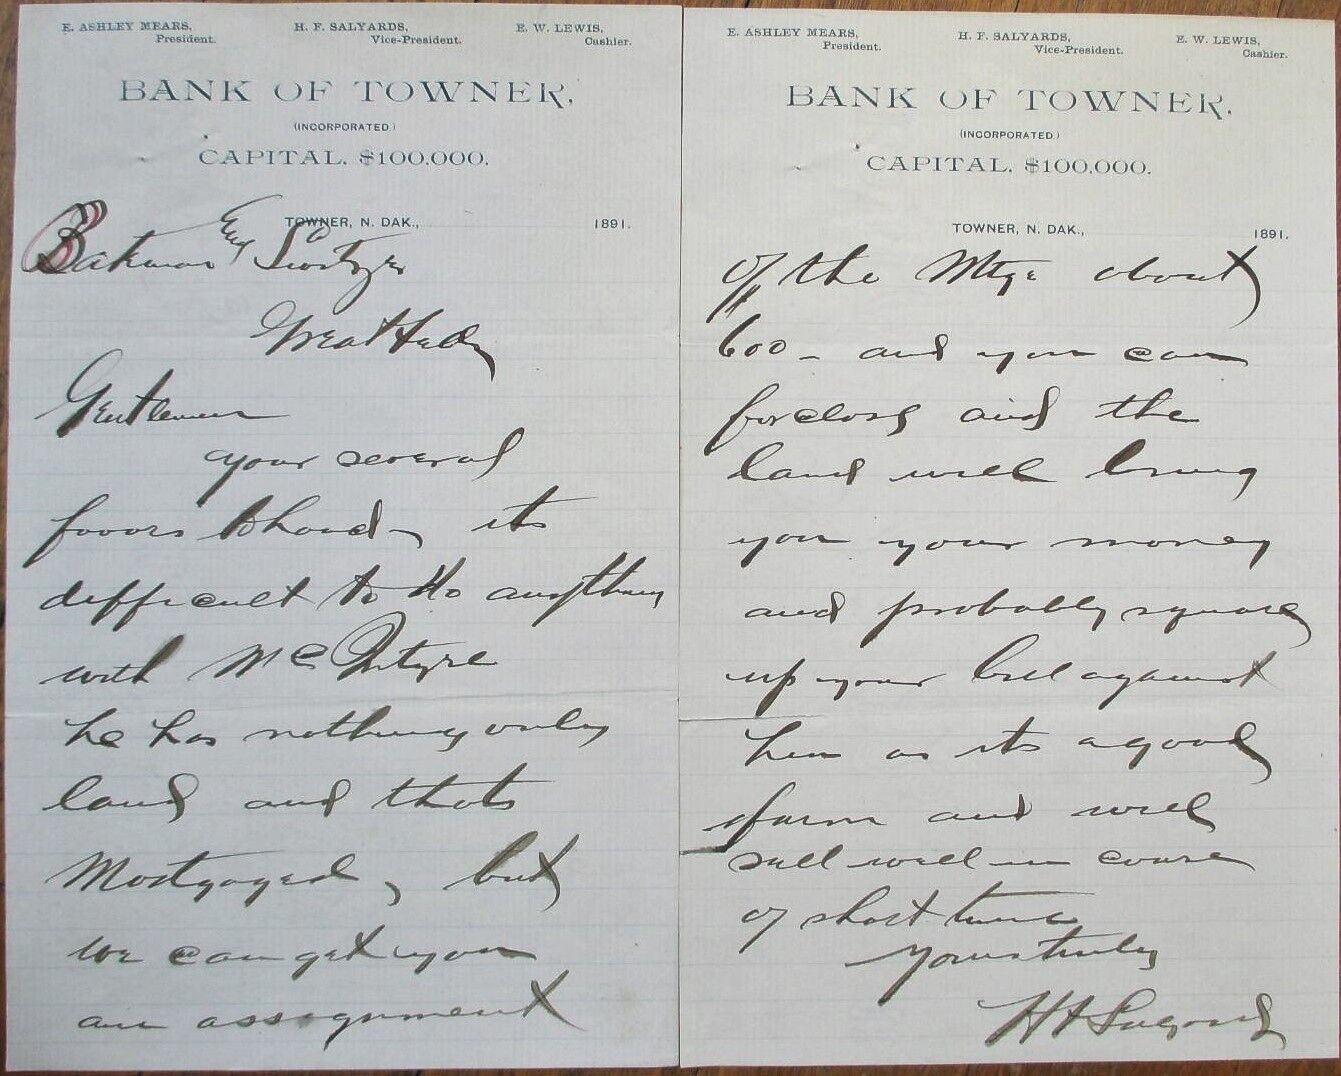 Towner, ND 1891 Letterhead Pair, Bank of Towner, North Dakota